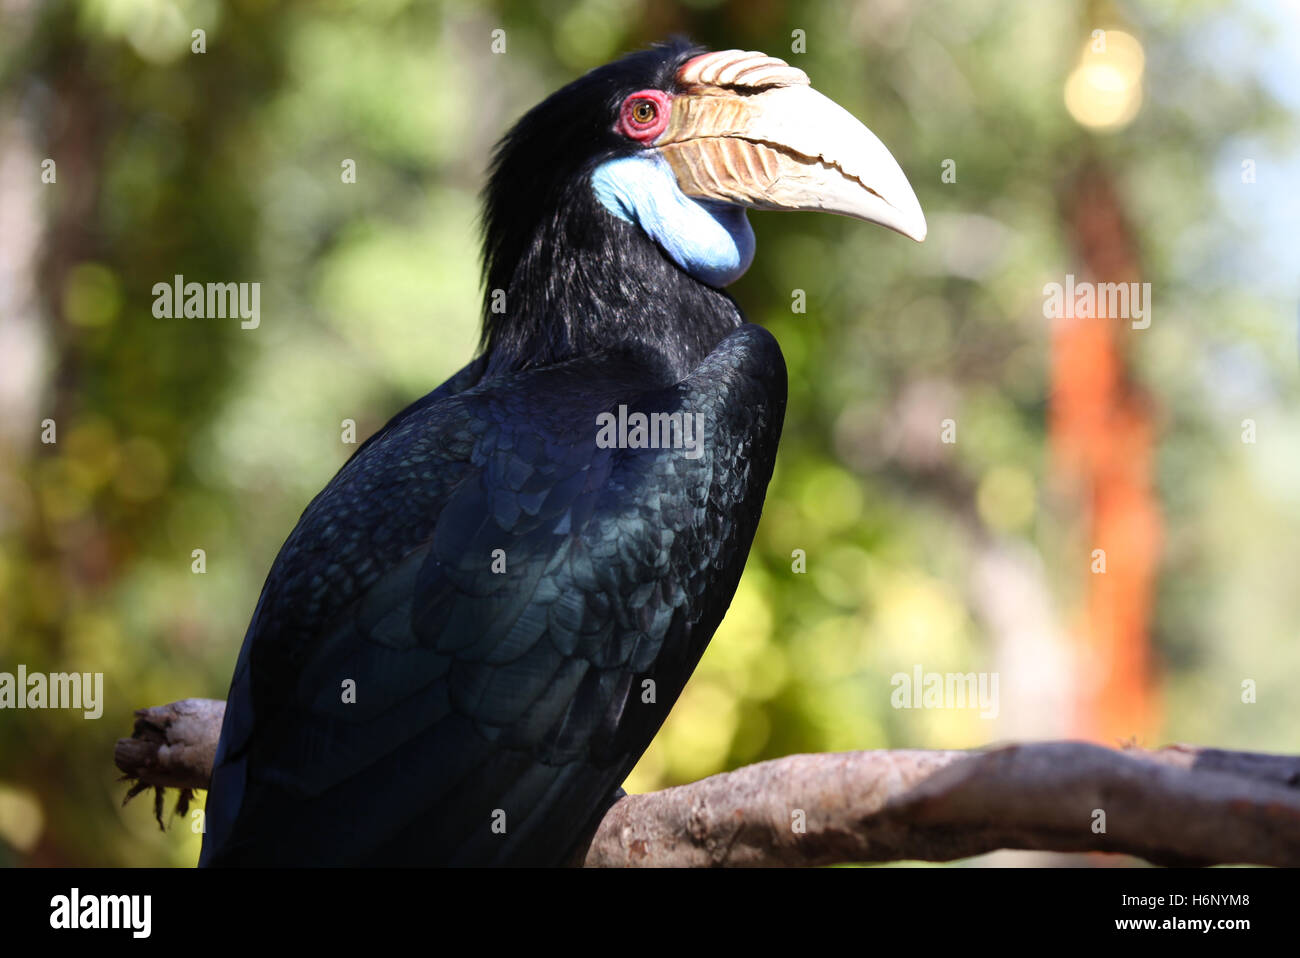 Black bird with a large beak, Thailand, South East Stock Photo - Alamy